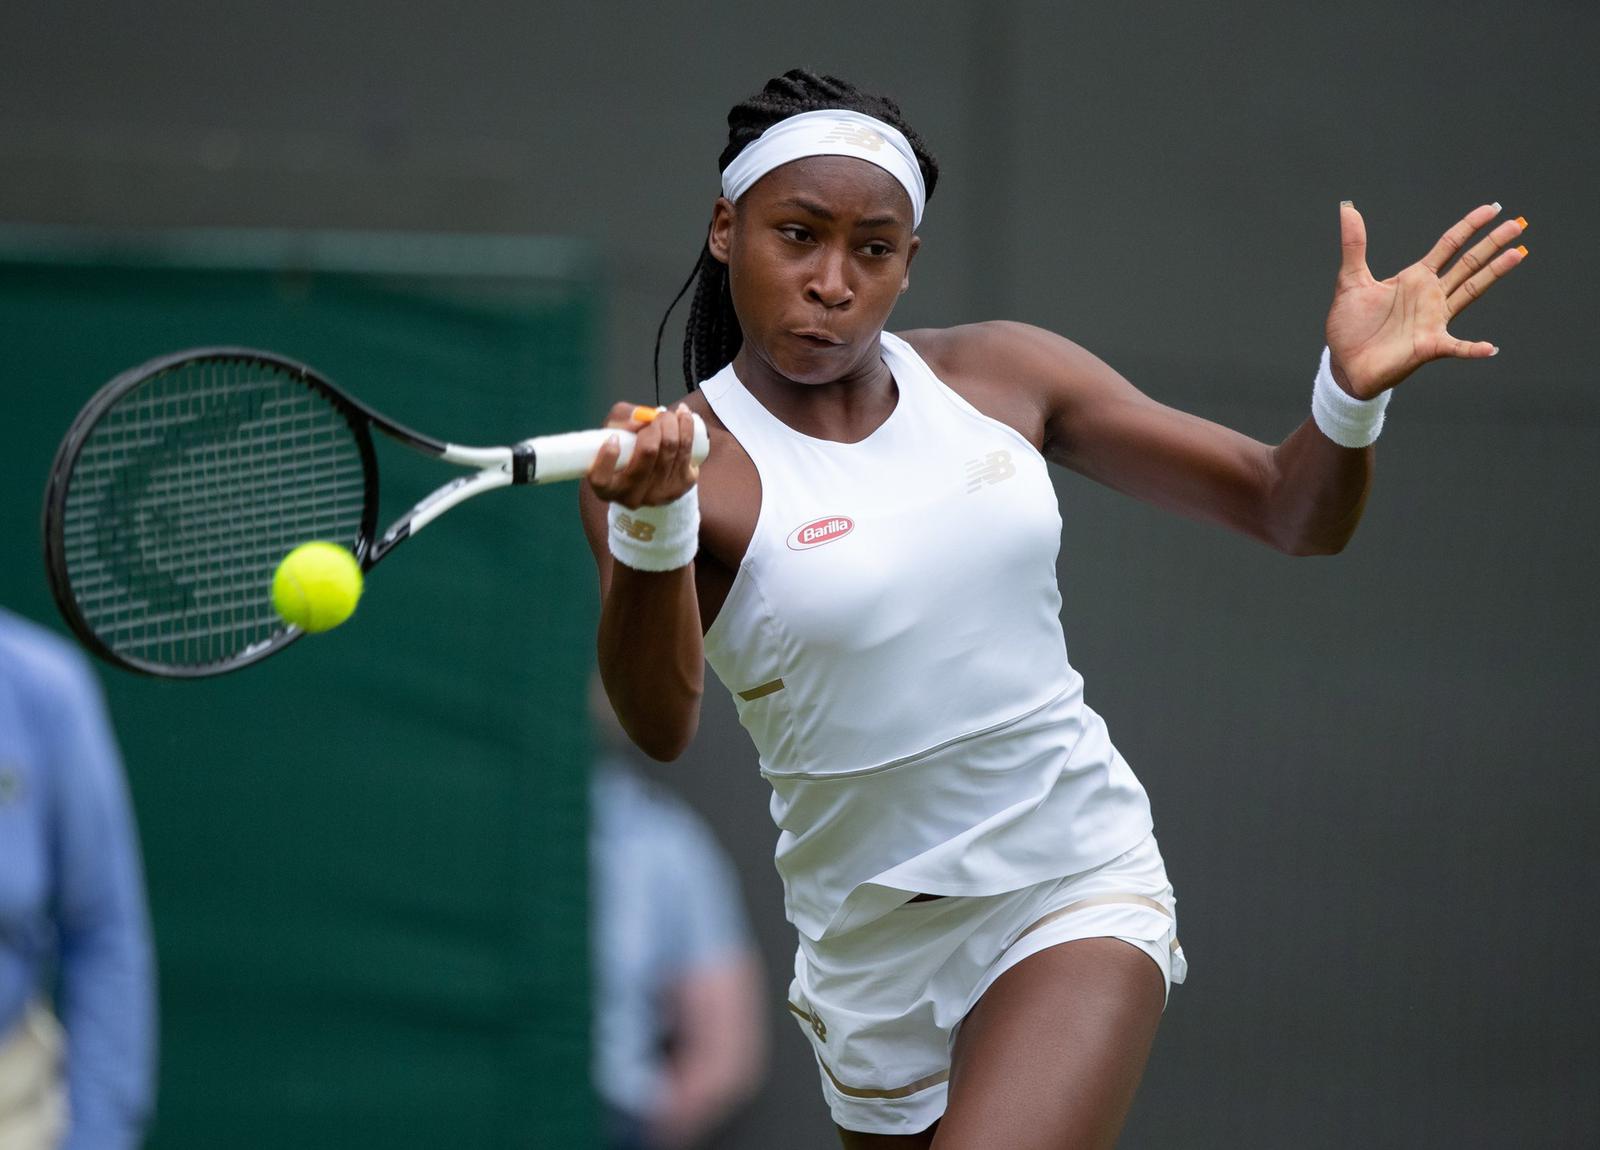 'My goal is to win Wimbledon,' says teen Gauff after Venus shock